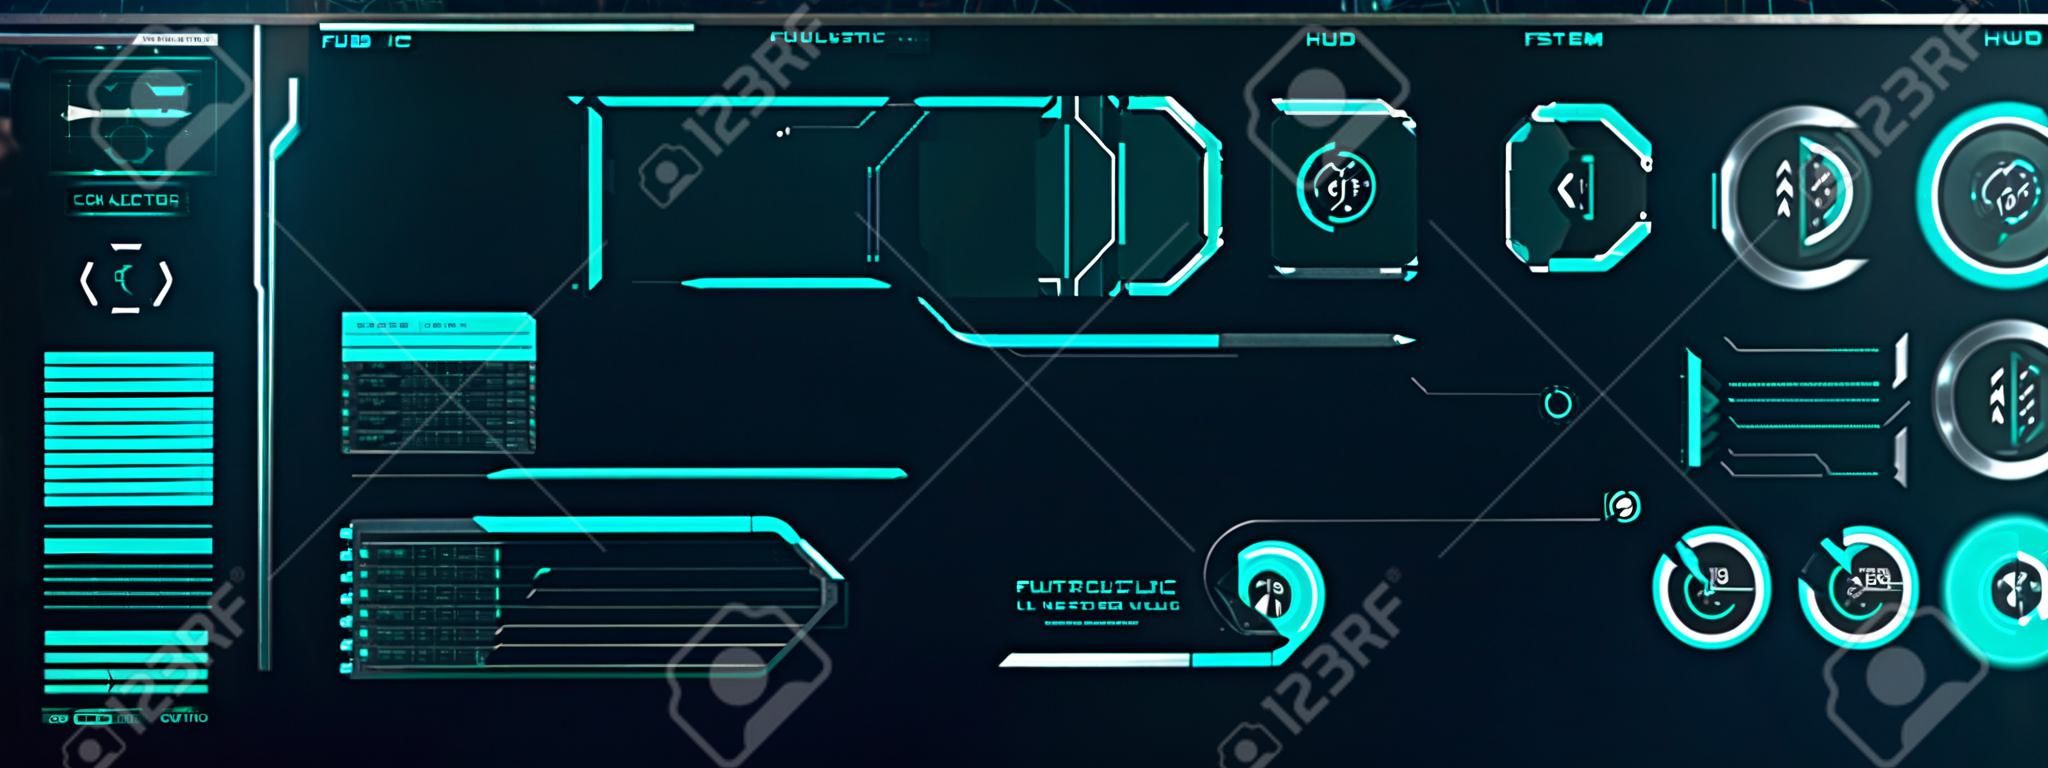 Futuristic Vector HUD Interface Screen Design. Digital callouts titles. HUD UI GUI futuristic user interface screen elements set. High tech screen for video game. Sci-fi concept design.